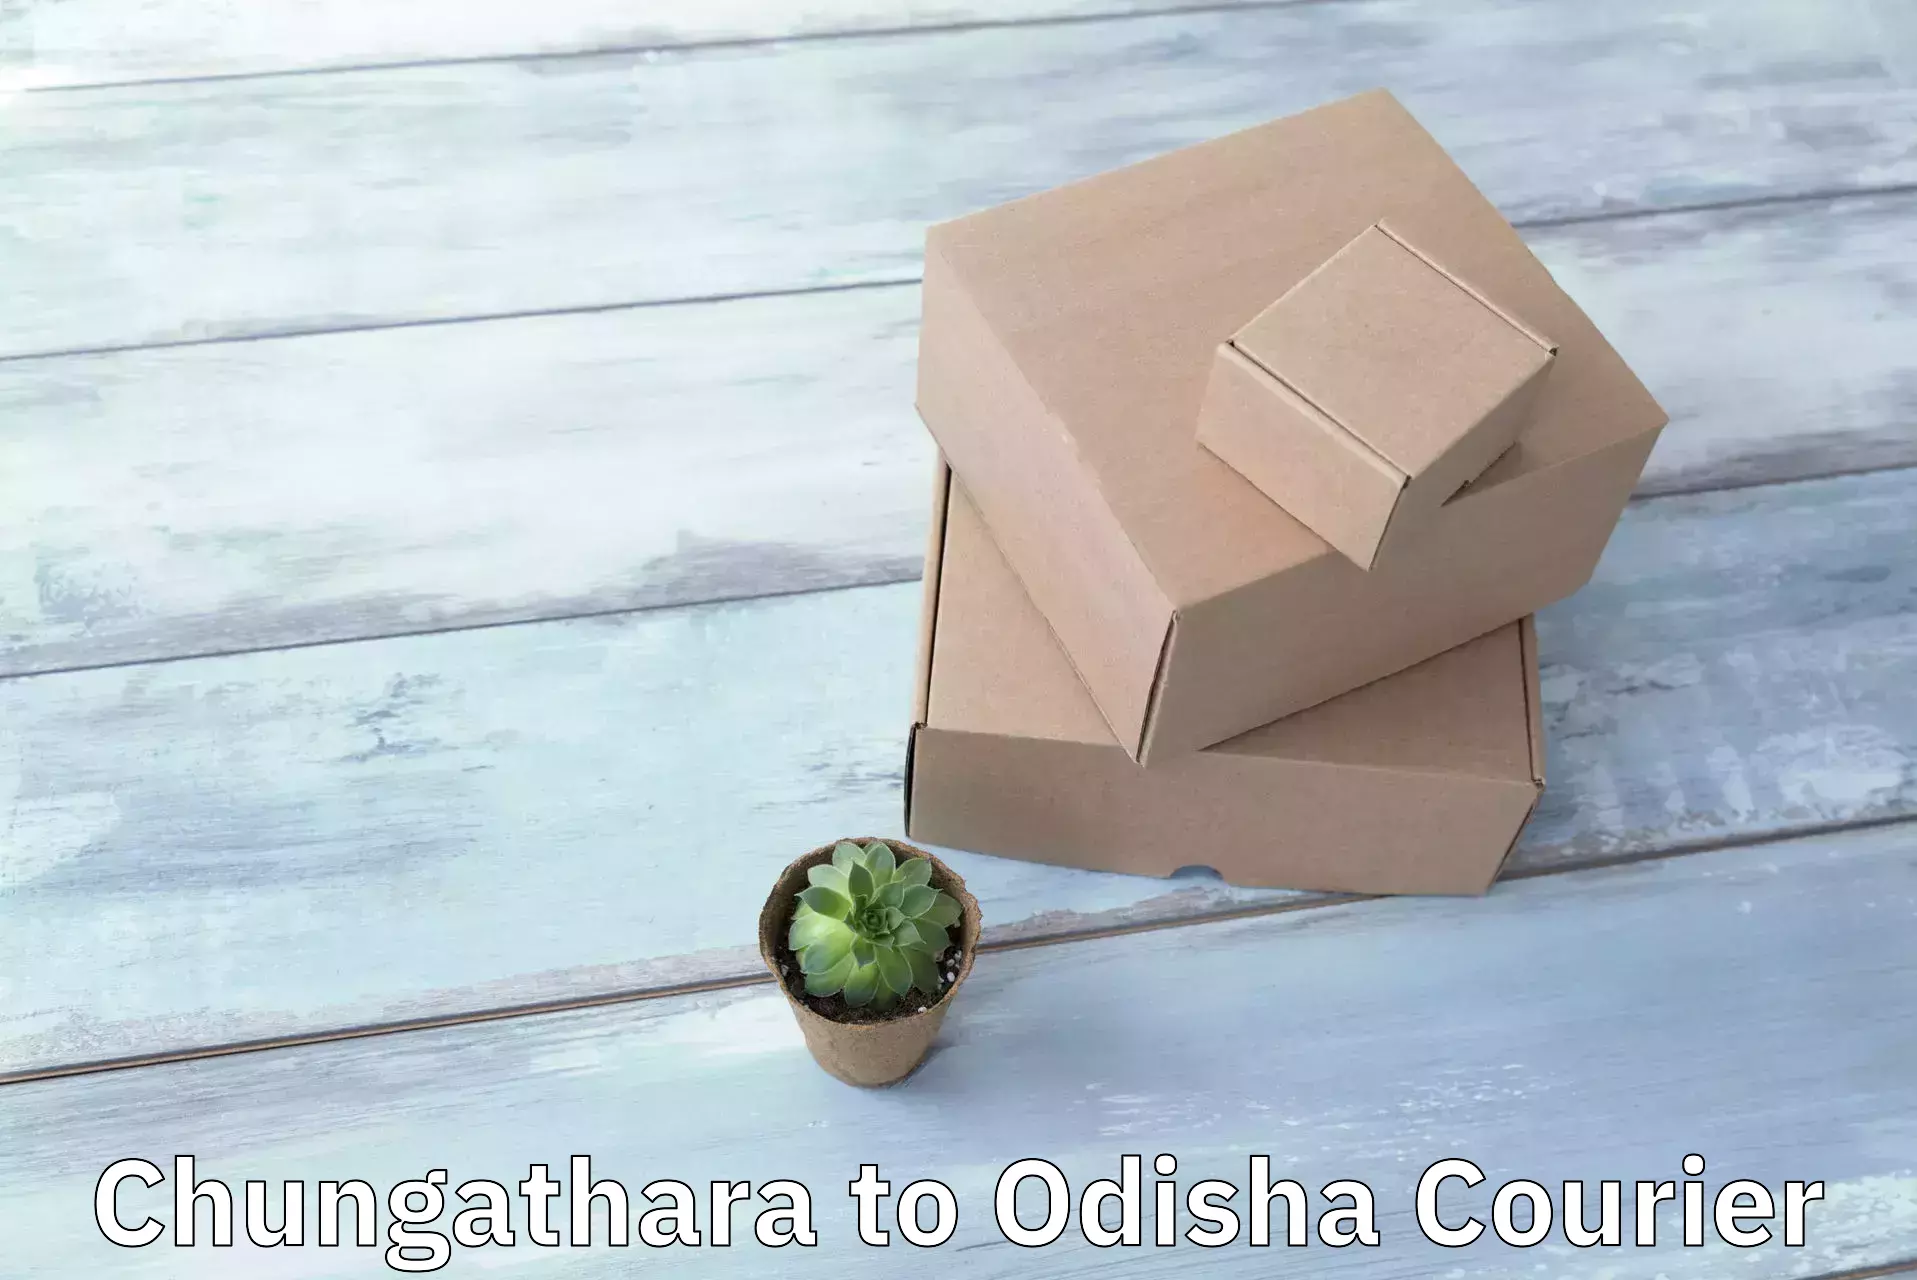 Commercial shipping rates in Chungathara to Odisha